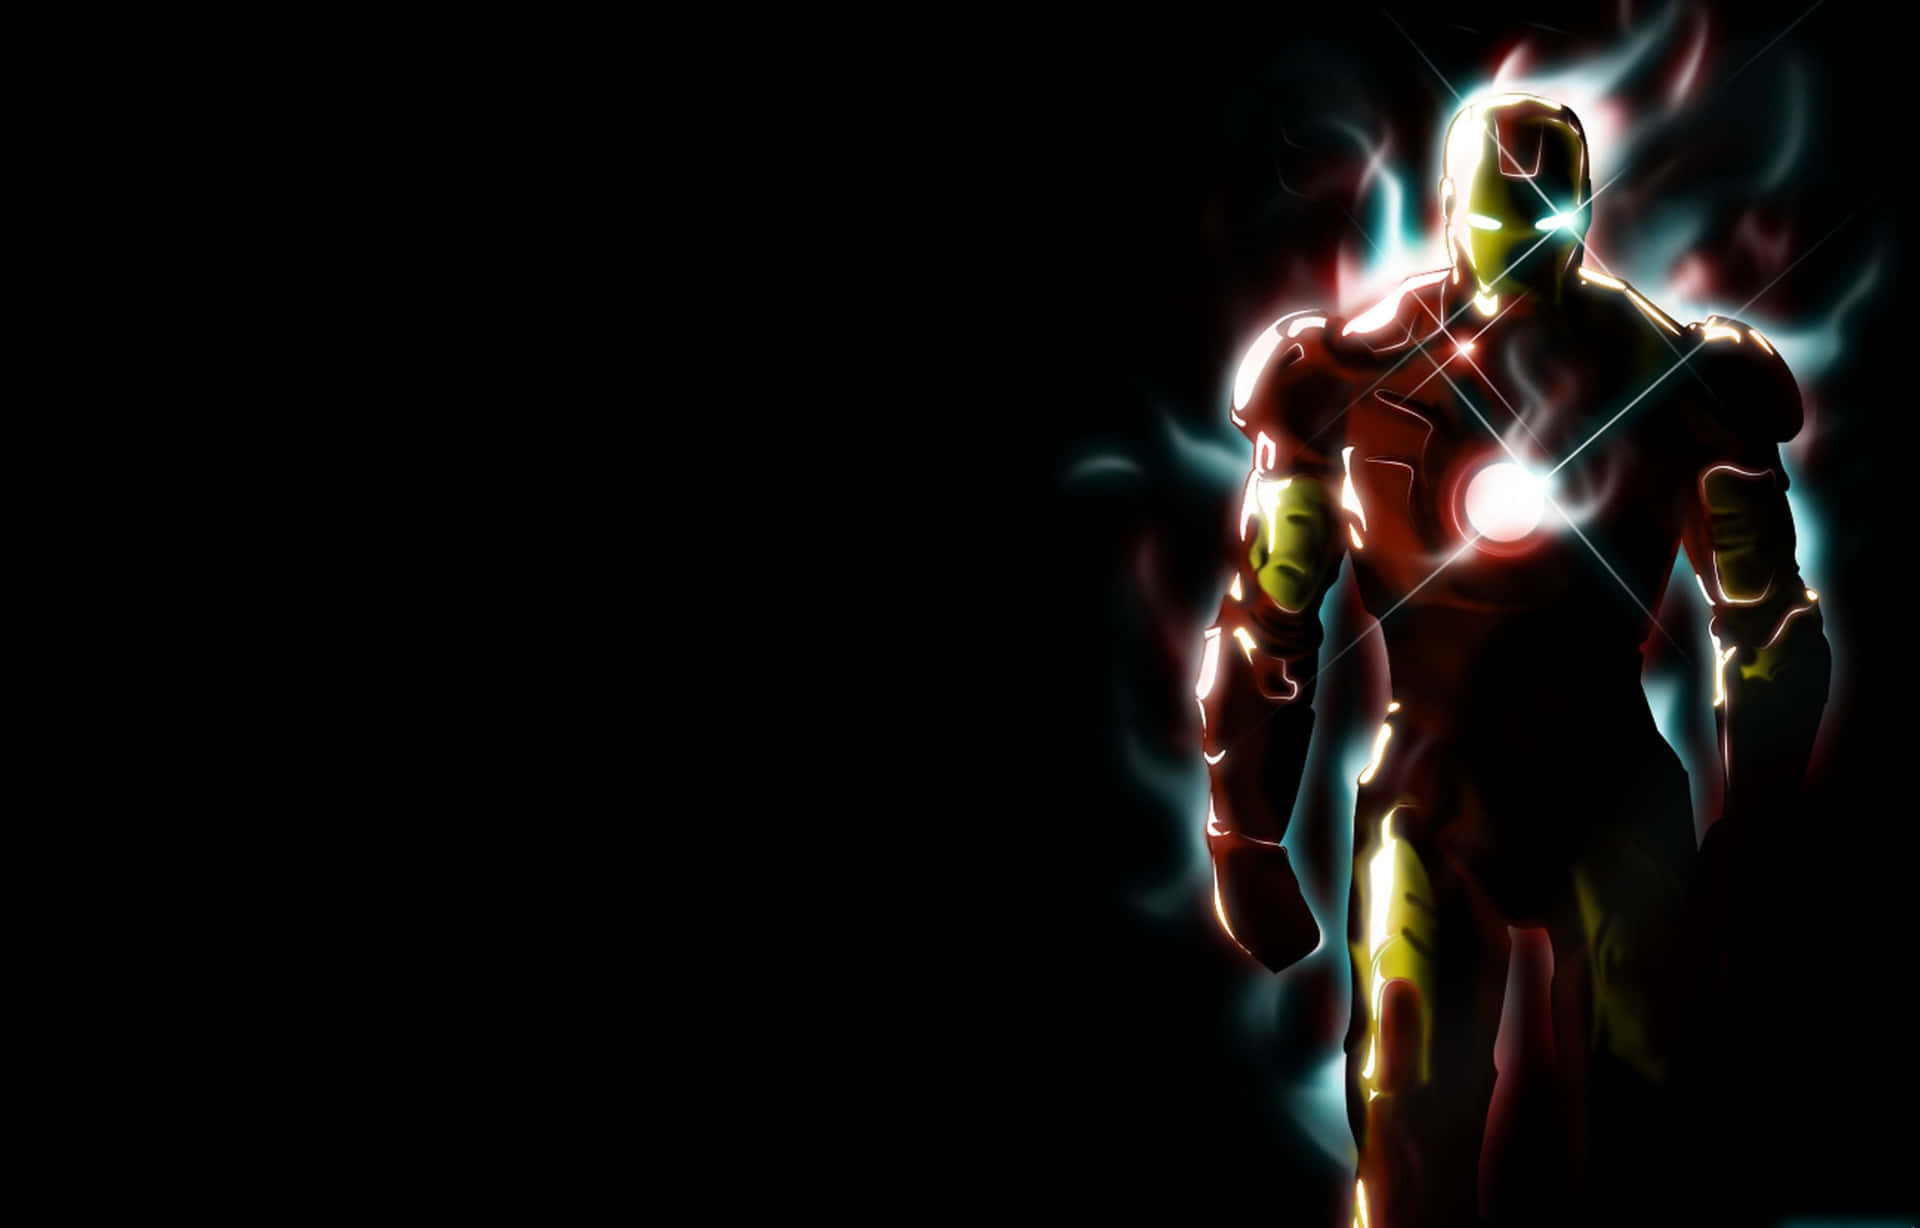 Tony Stark as Iron Man - The Best! Wallpaper